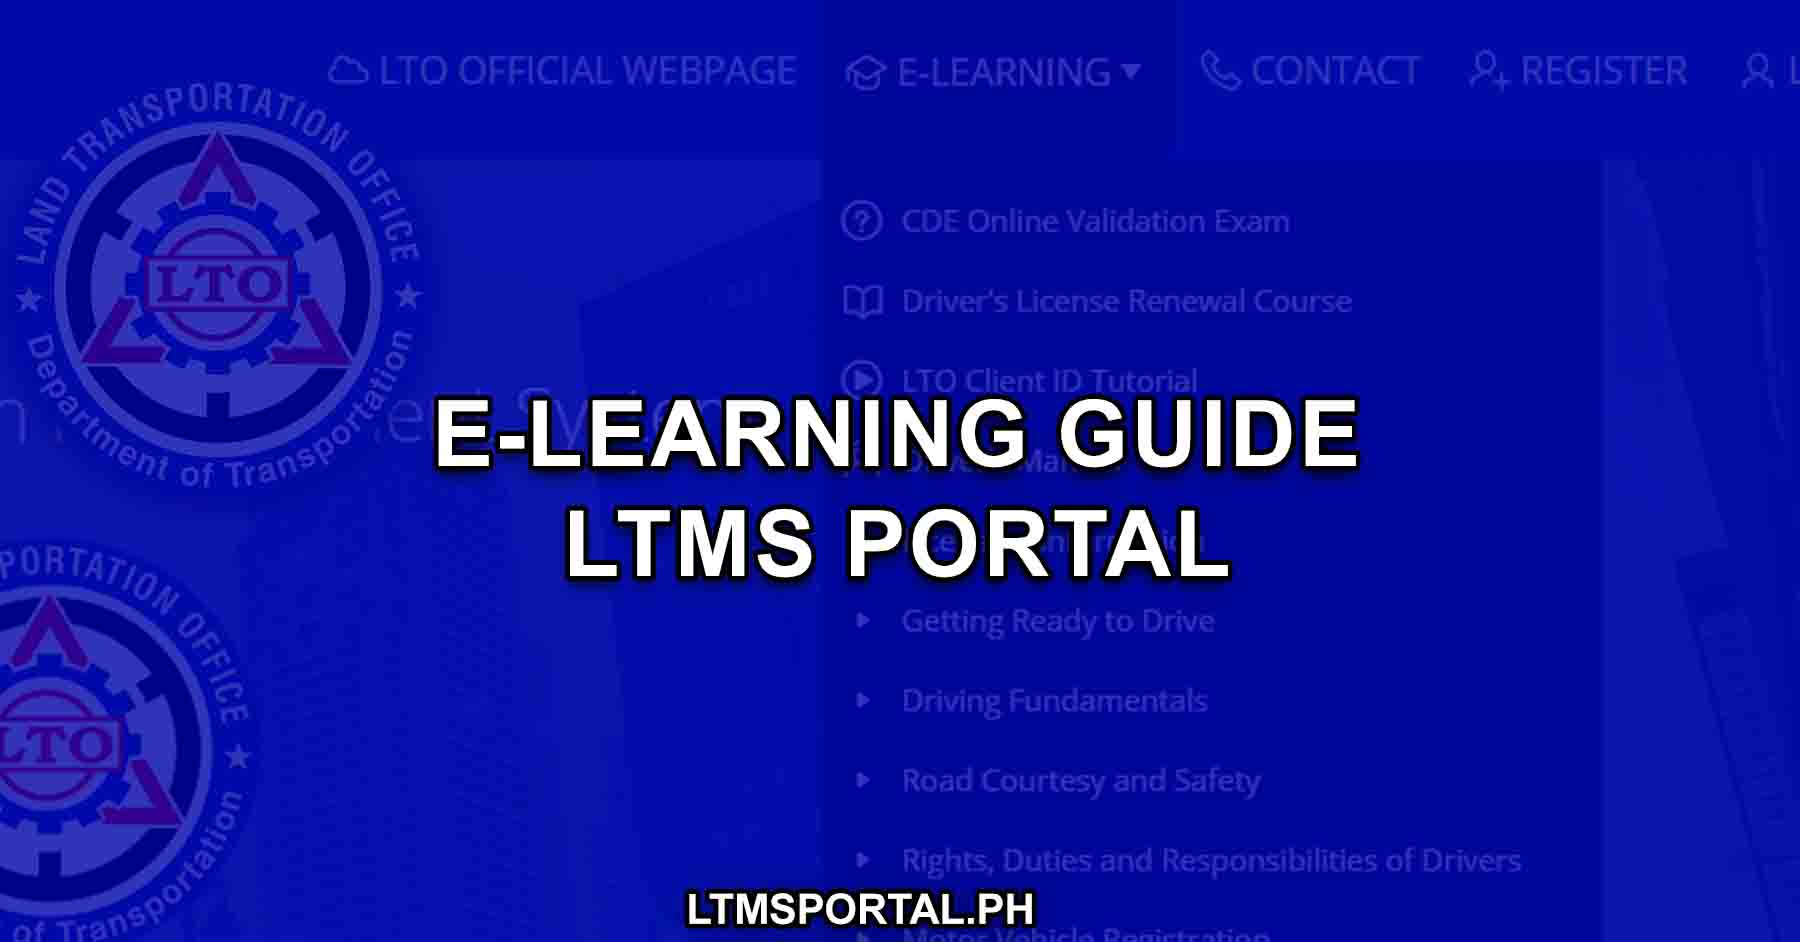 ltms e-learning guide website portal